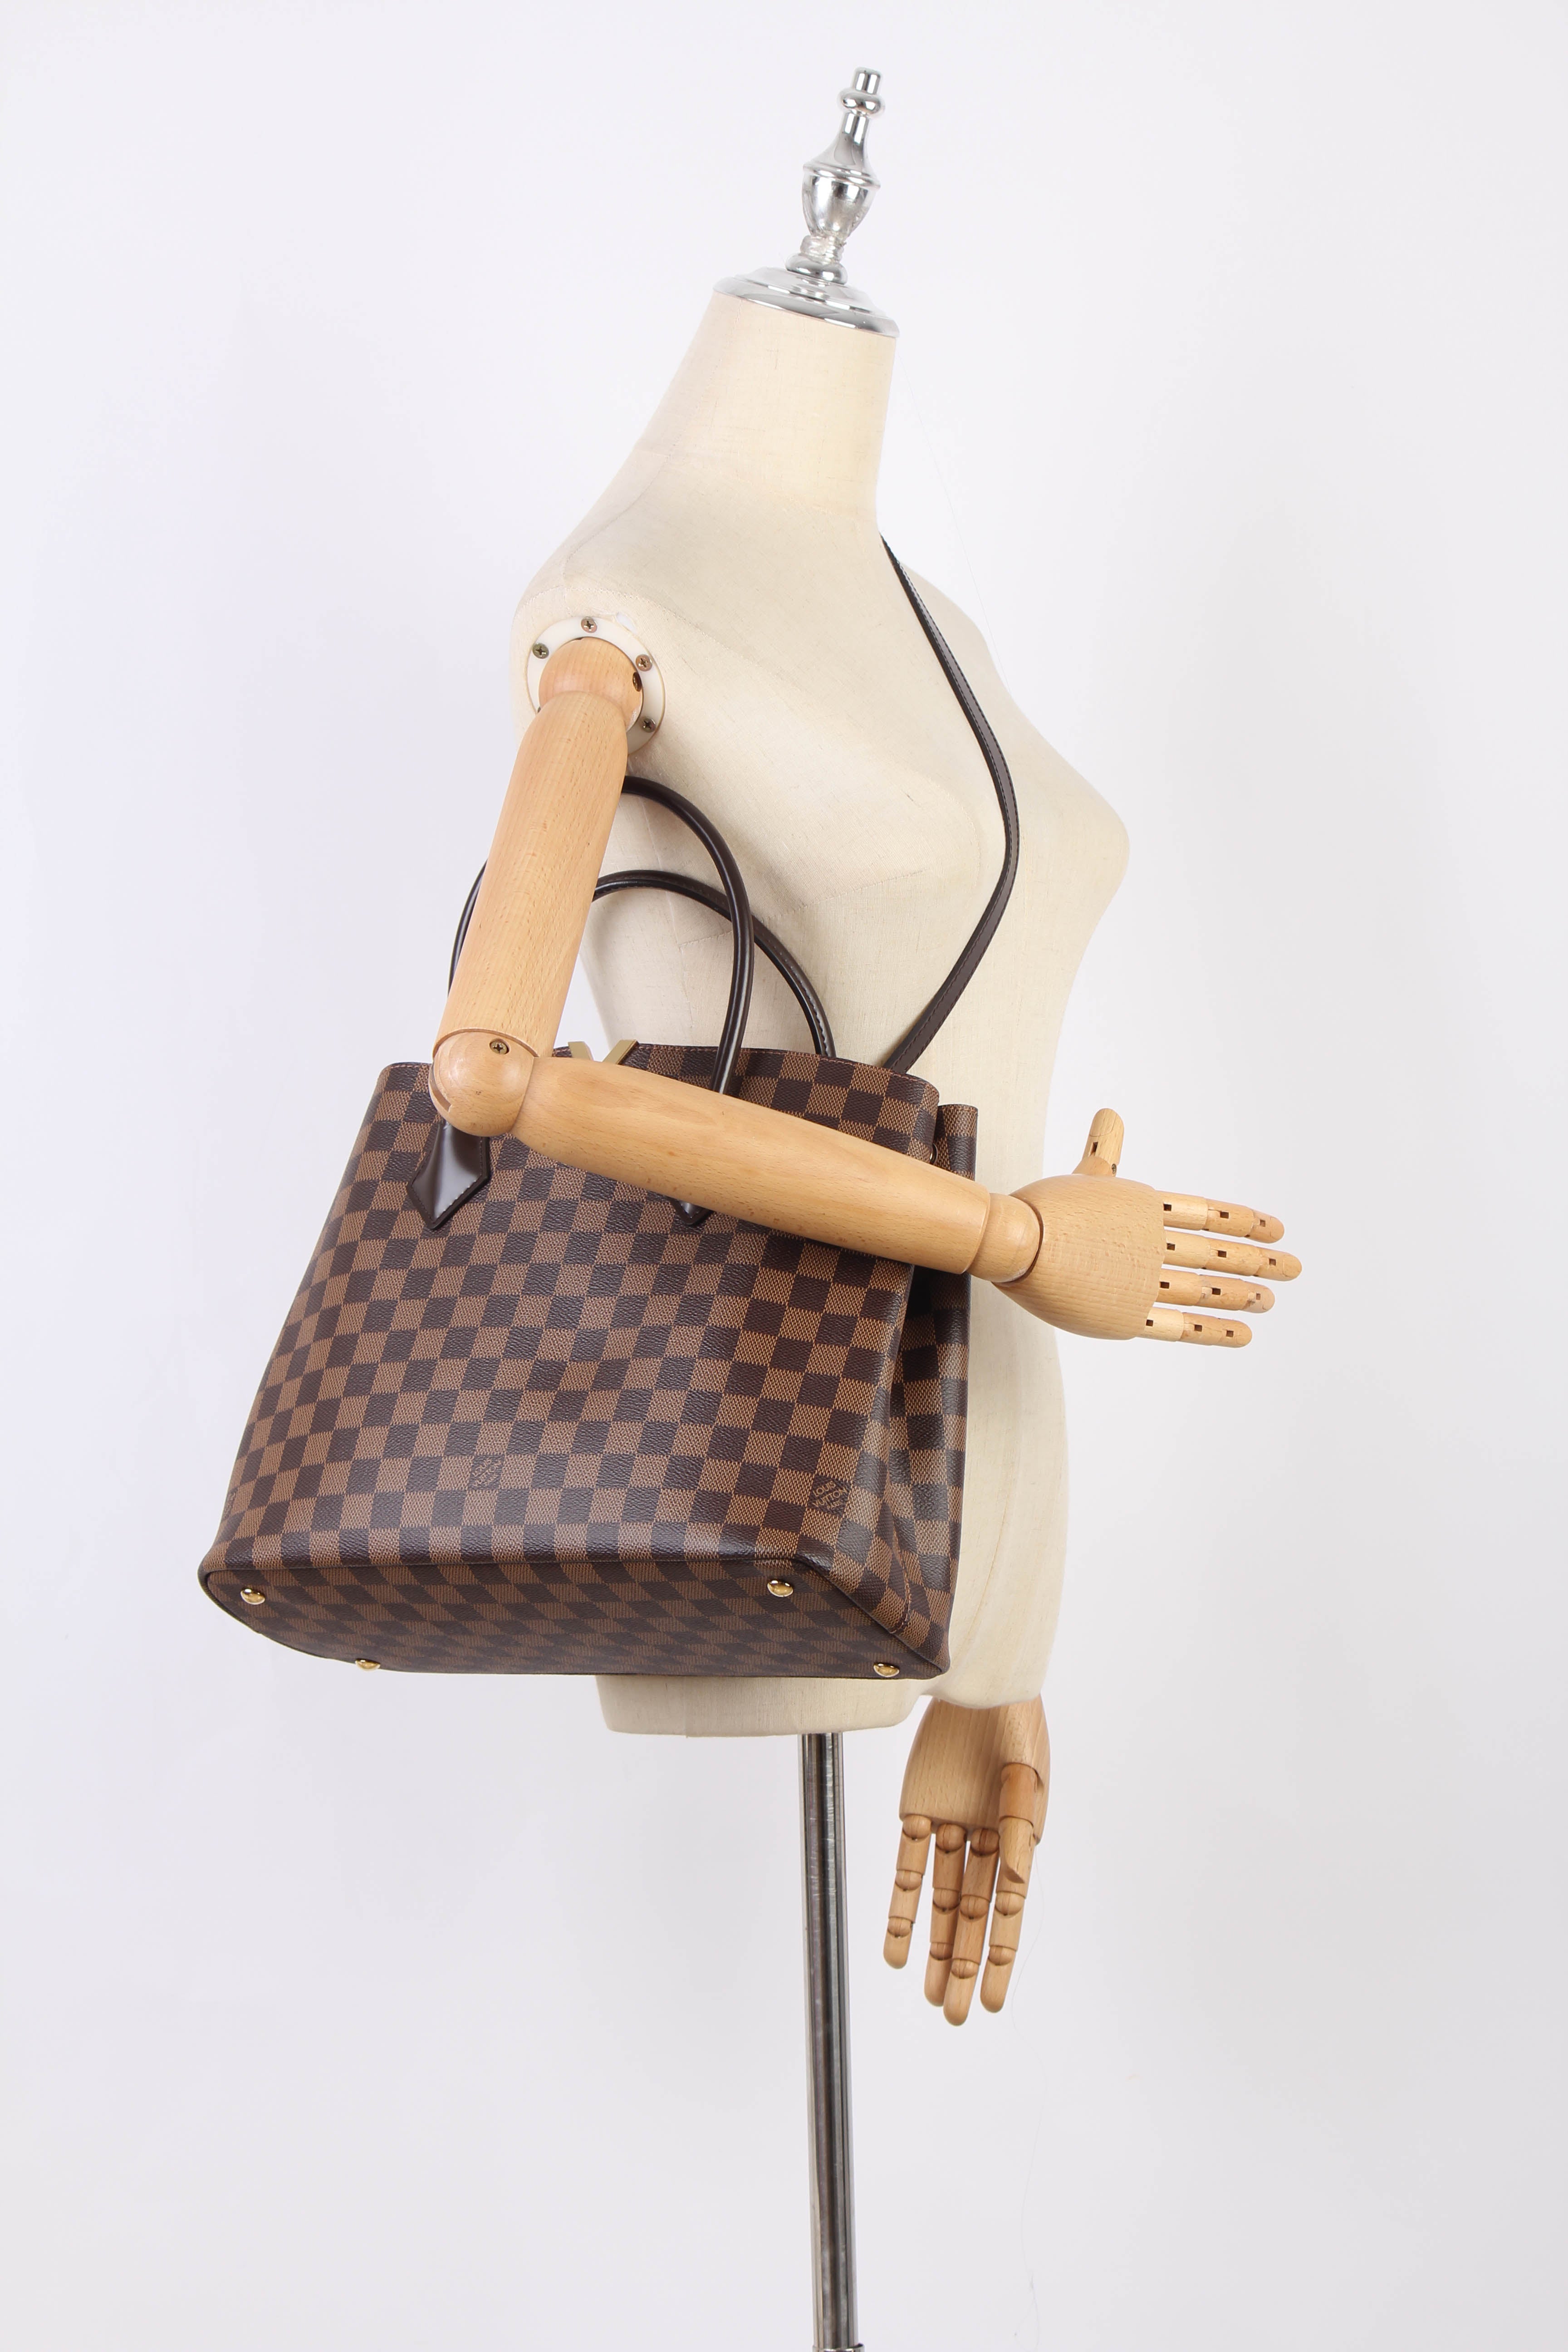 Louis Vuitton N41435 Kensington Damier Ebene 'V' Tote Bag